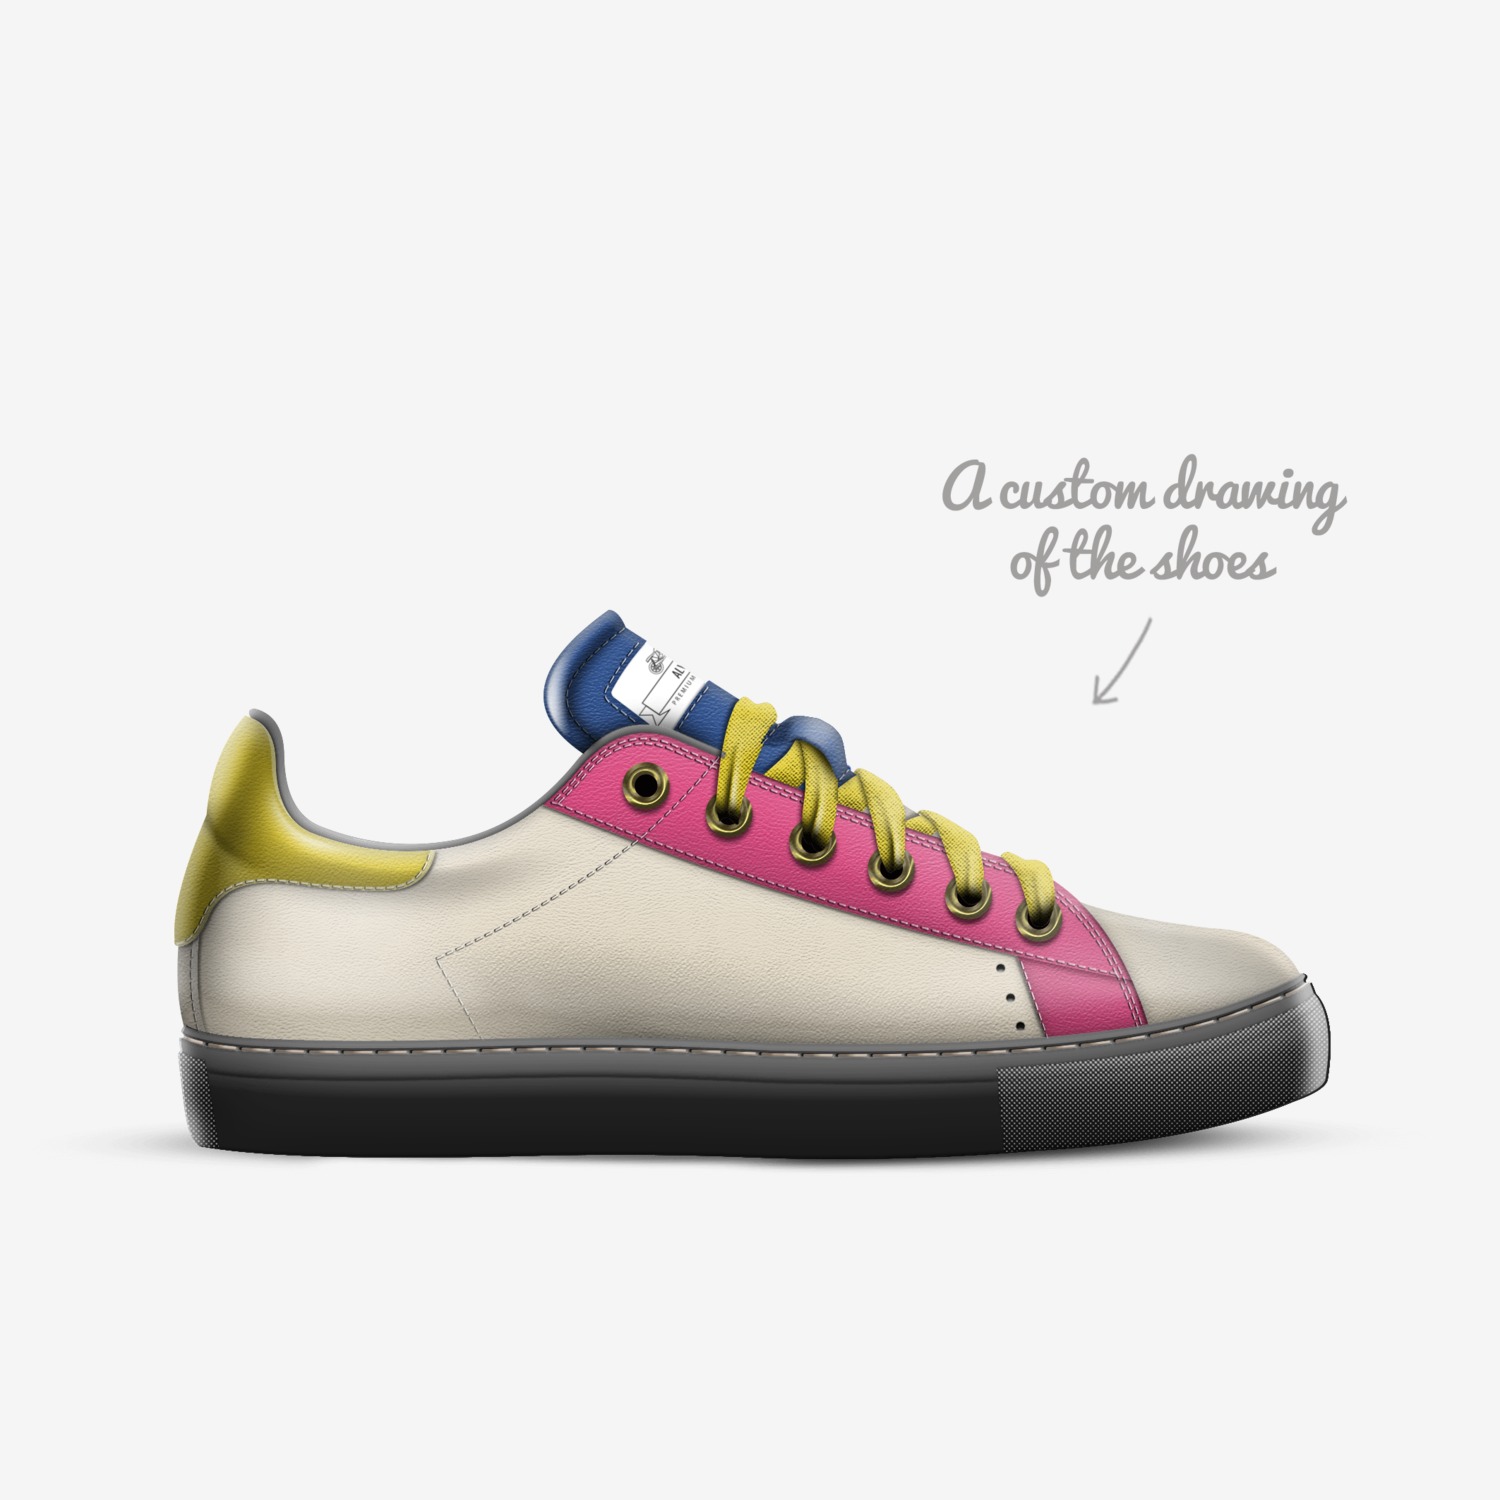 Unique Style Handcrafted Shoes: Alvin Italian DEK Beige